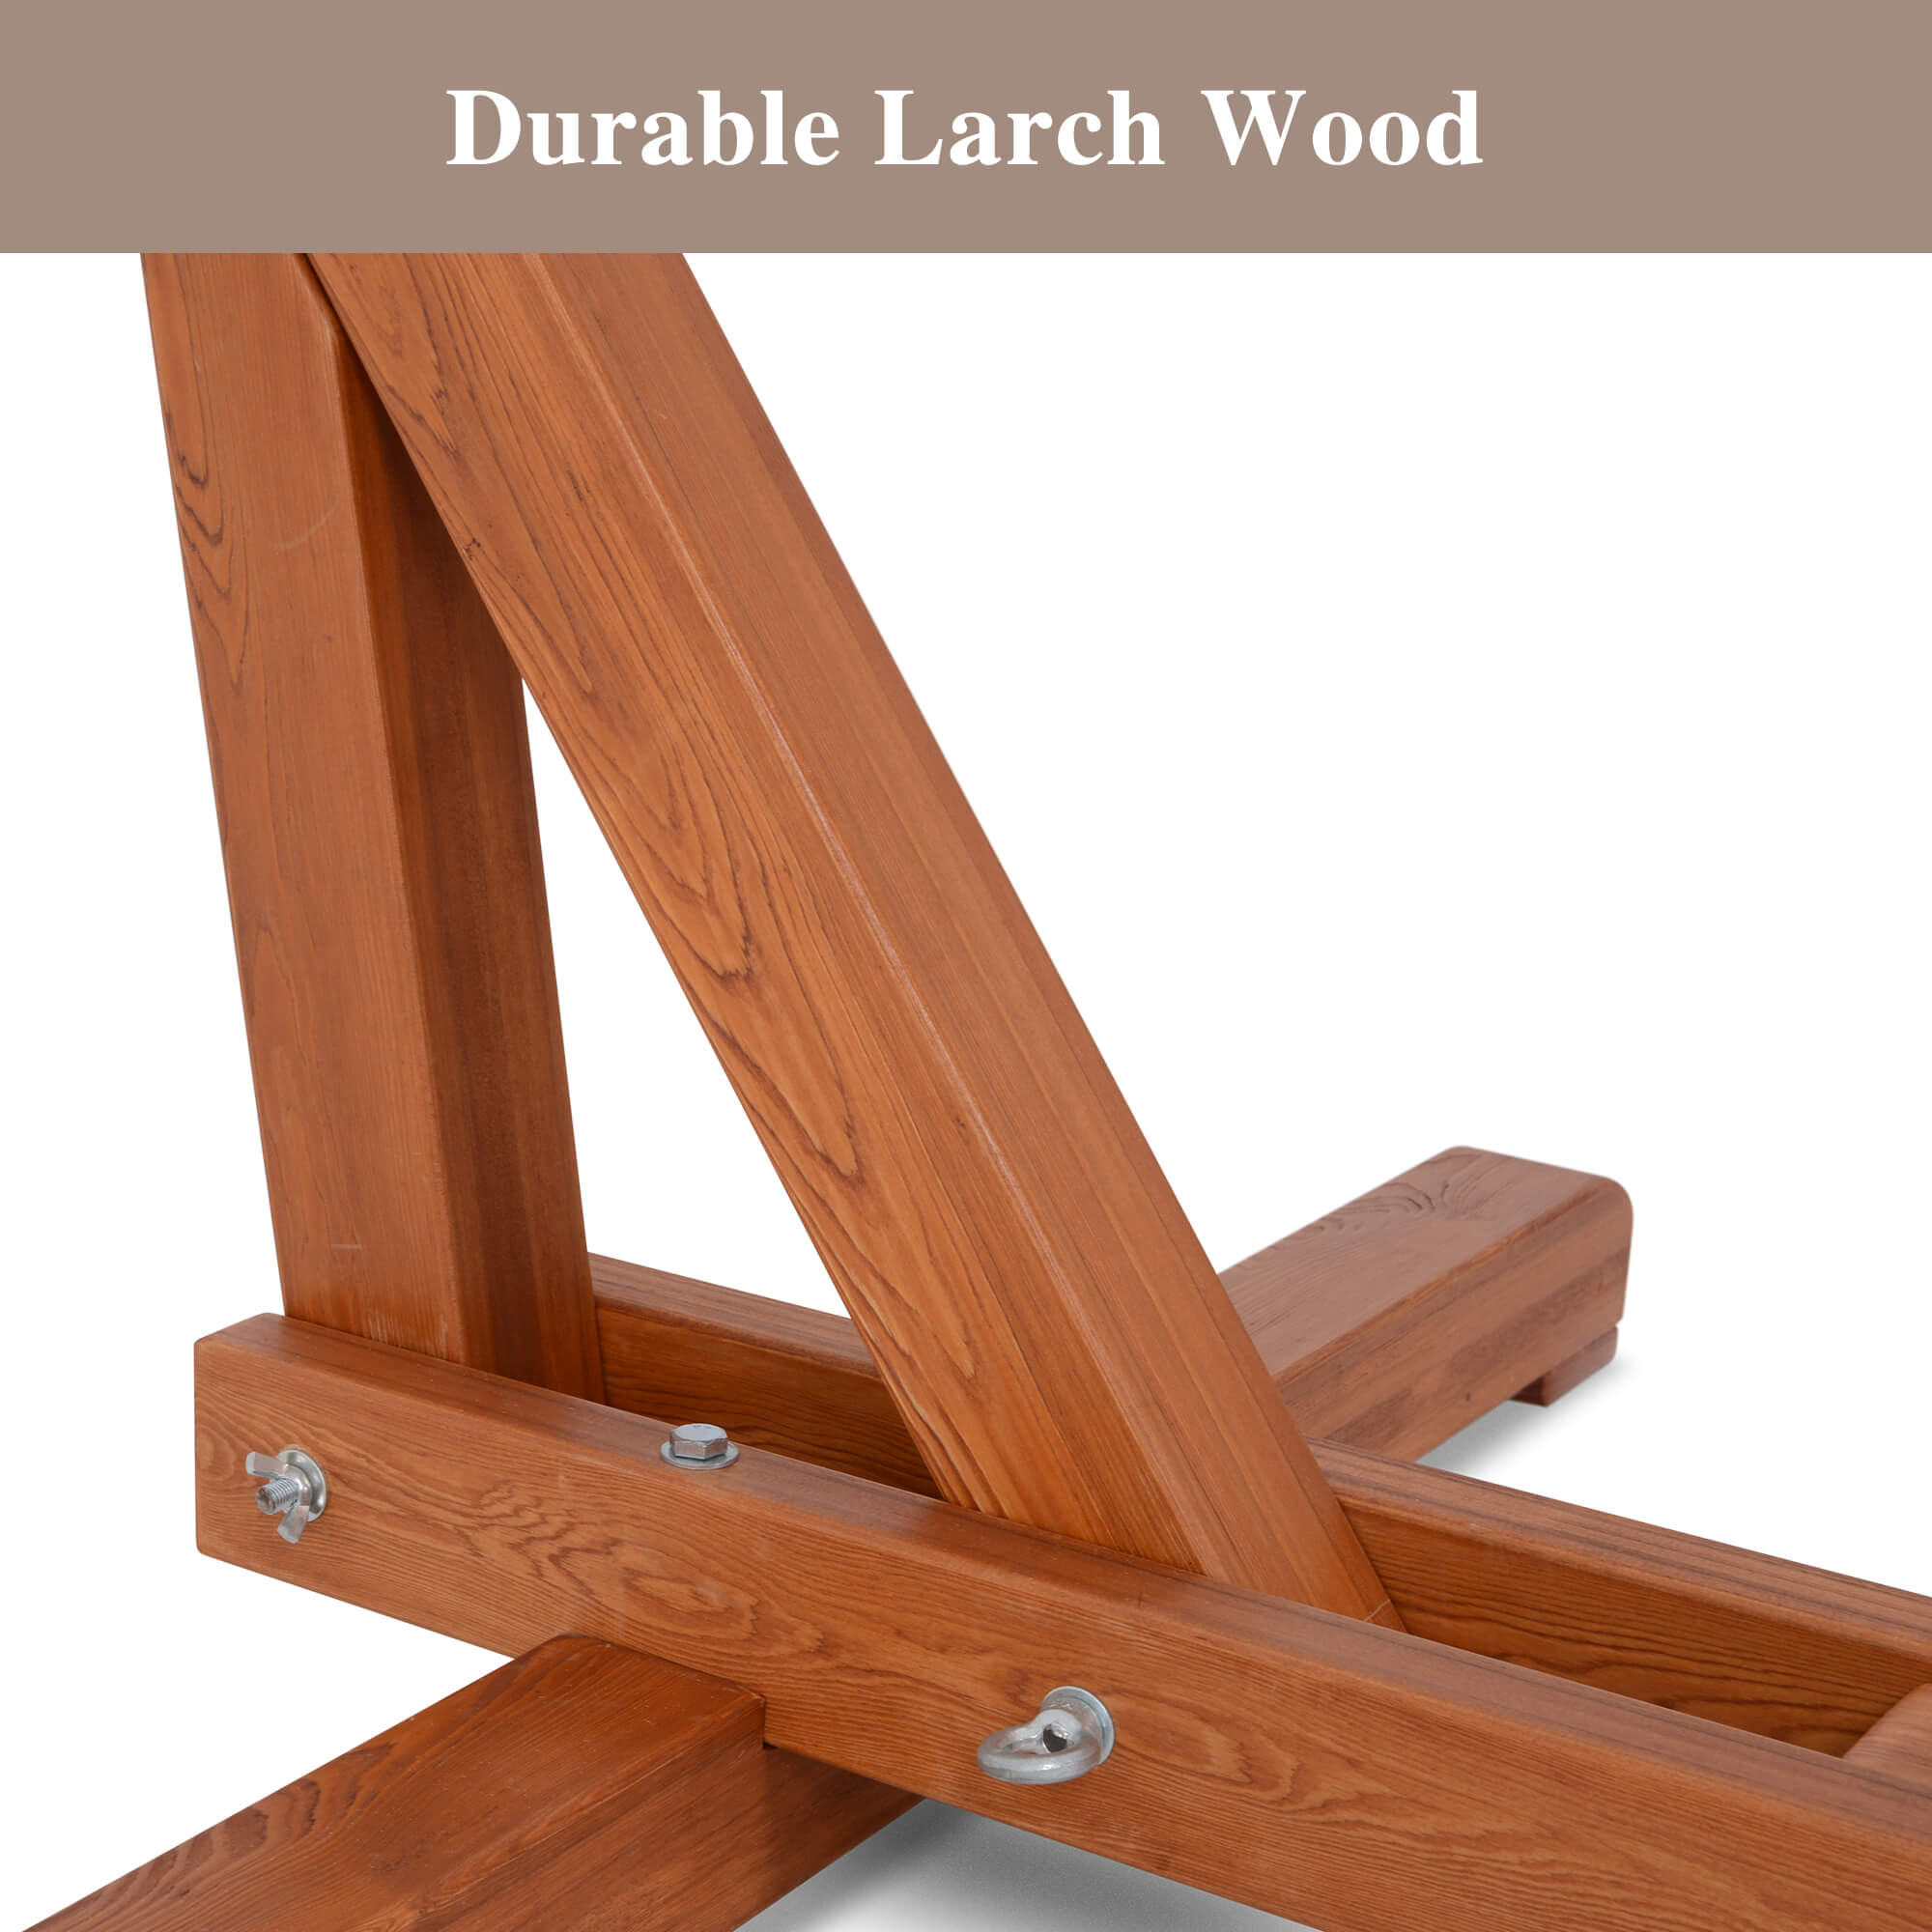 hammock with adjustable wood stand#color_dark-gray